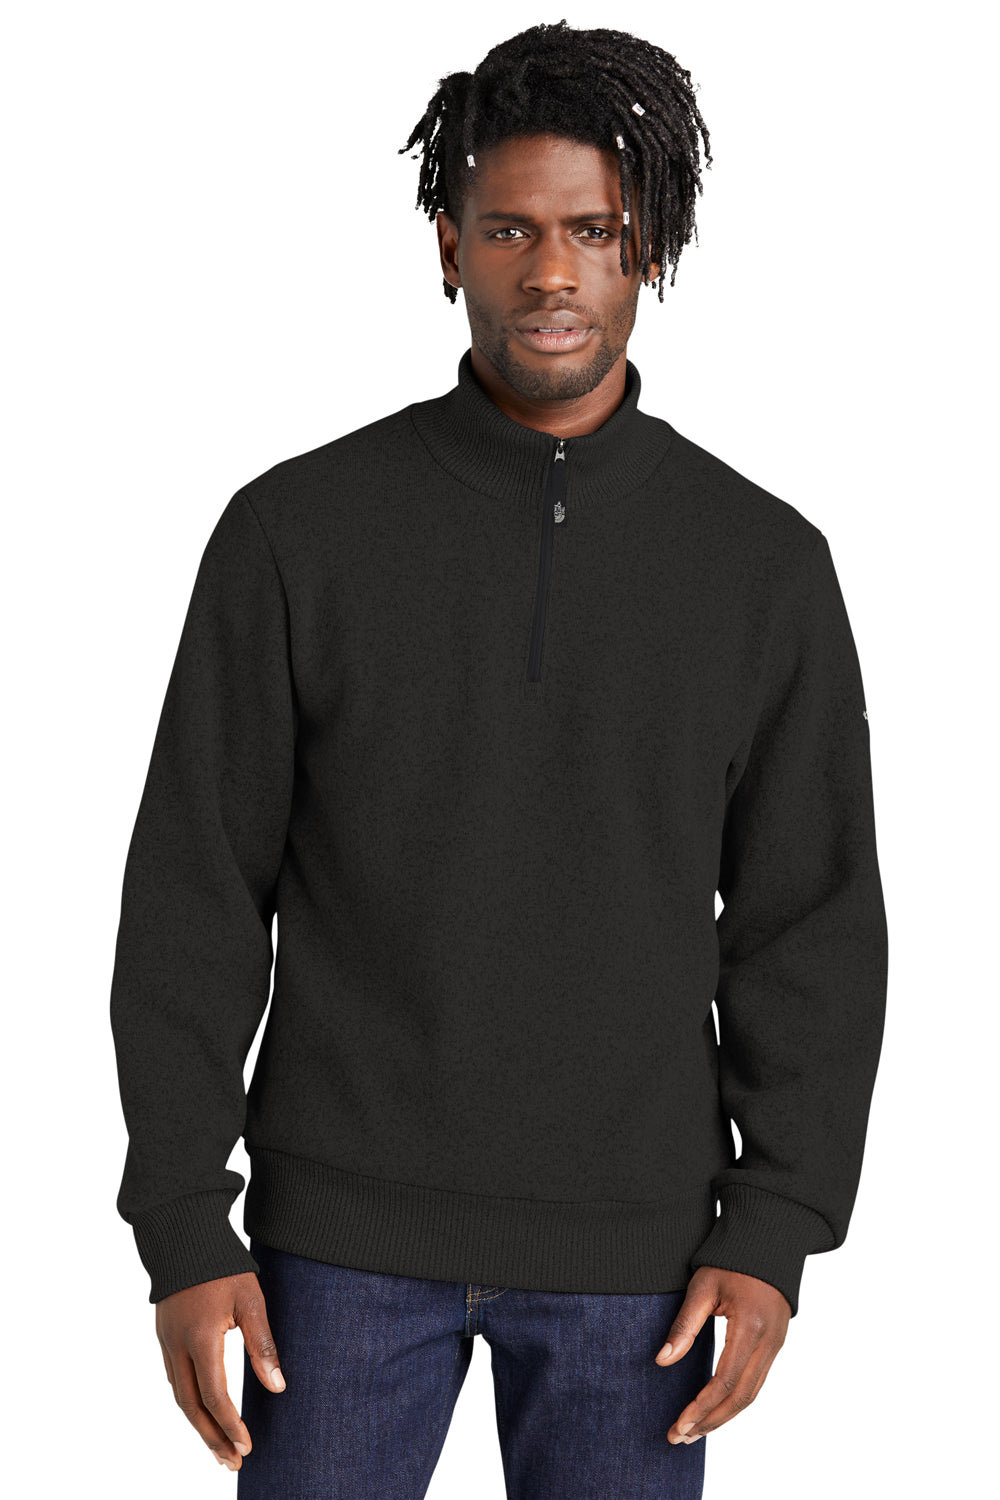 The North Face NF0A5ISE 1/4 Zip Sweater Fleece Sweatshirt Heather Black Front